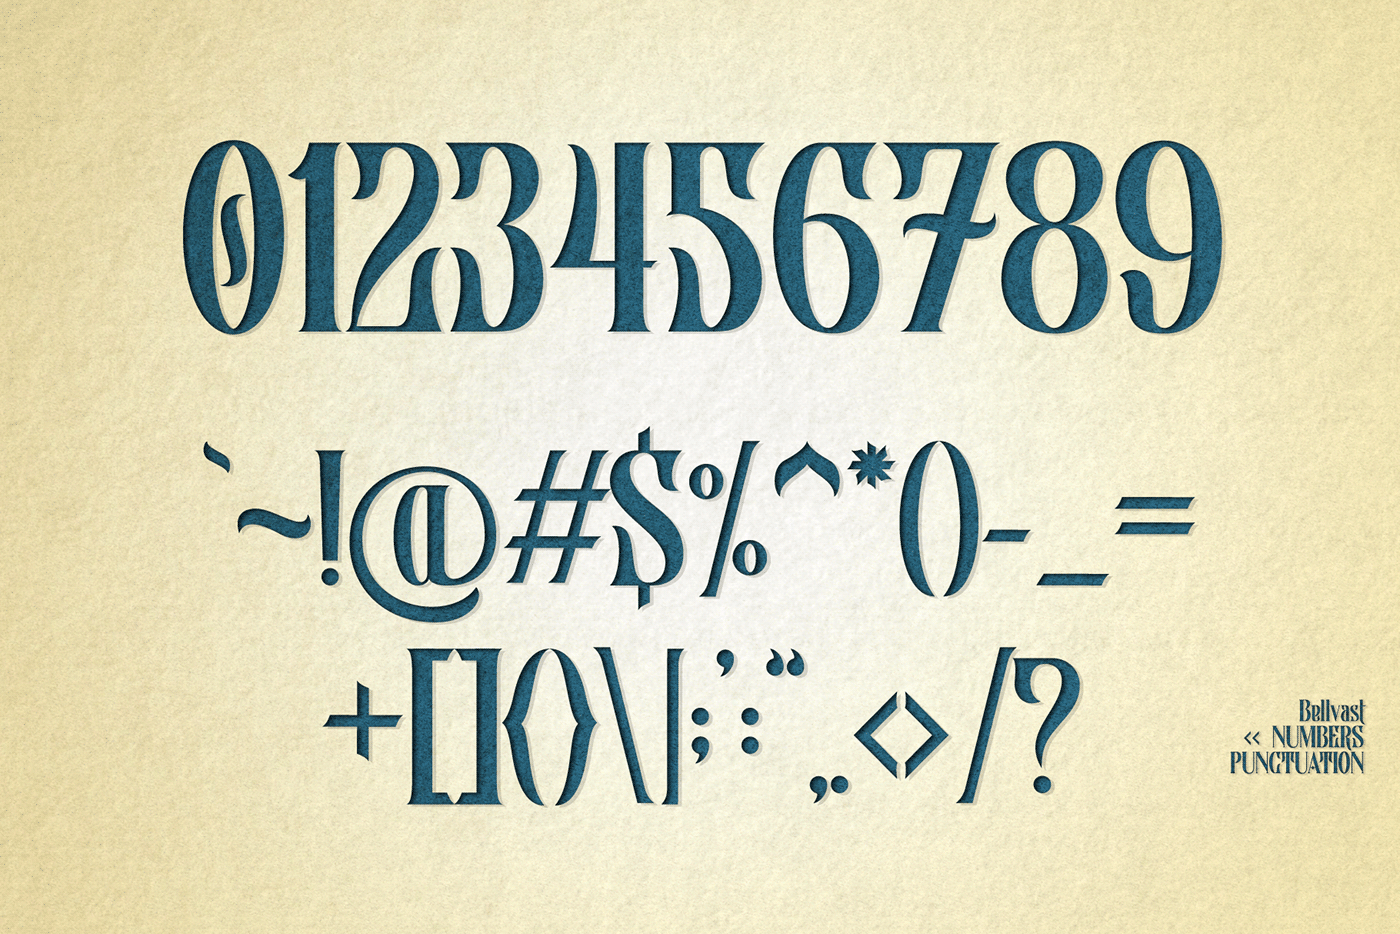 Display elegantfont font logofont serif Typeface vintage vintagefont vintagetypeface